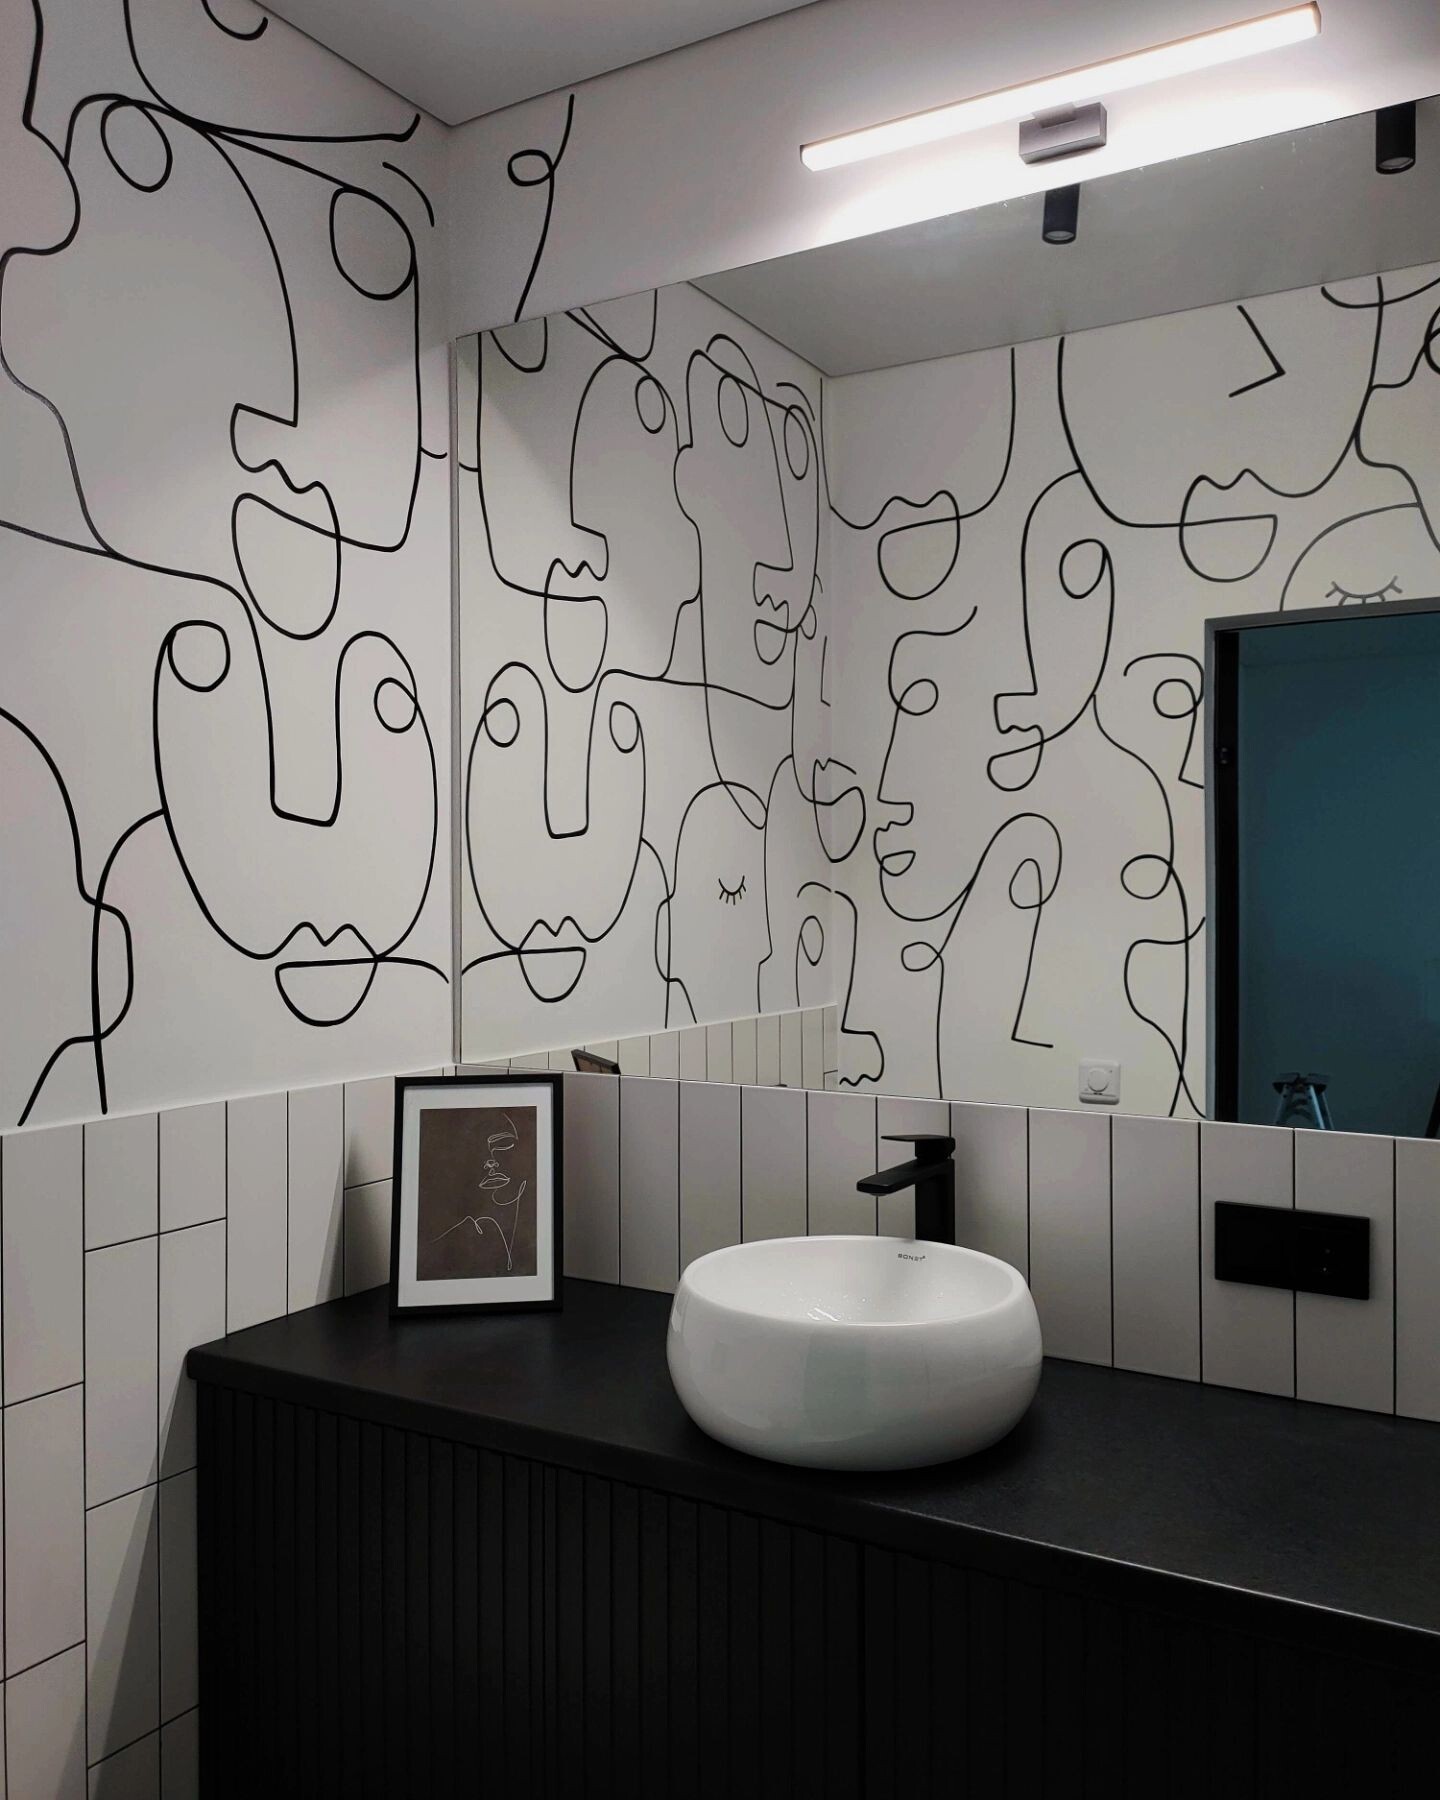 ArtStation - Minimalistic faces painting of the bathroom